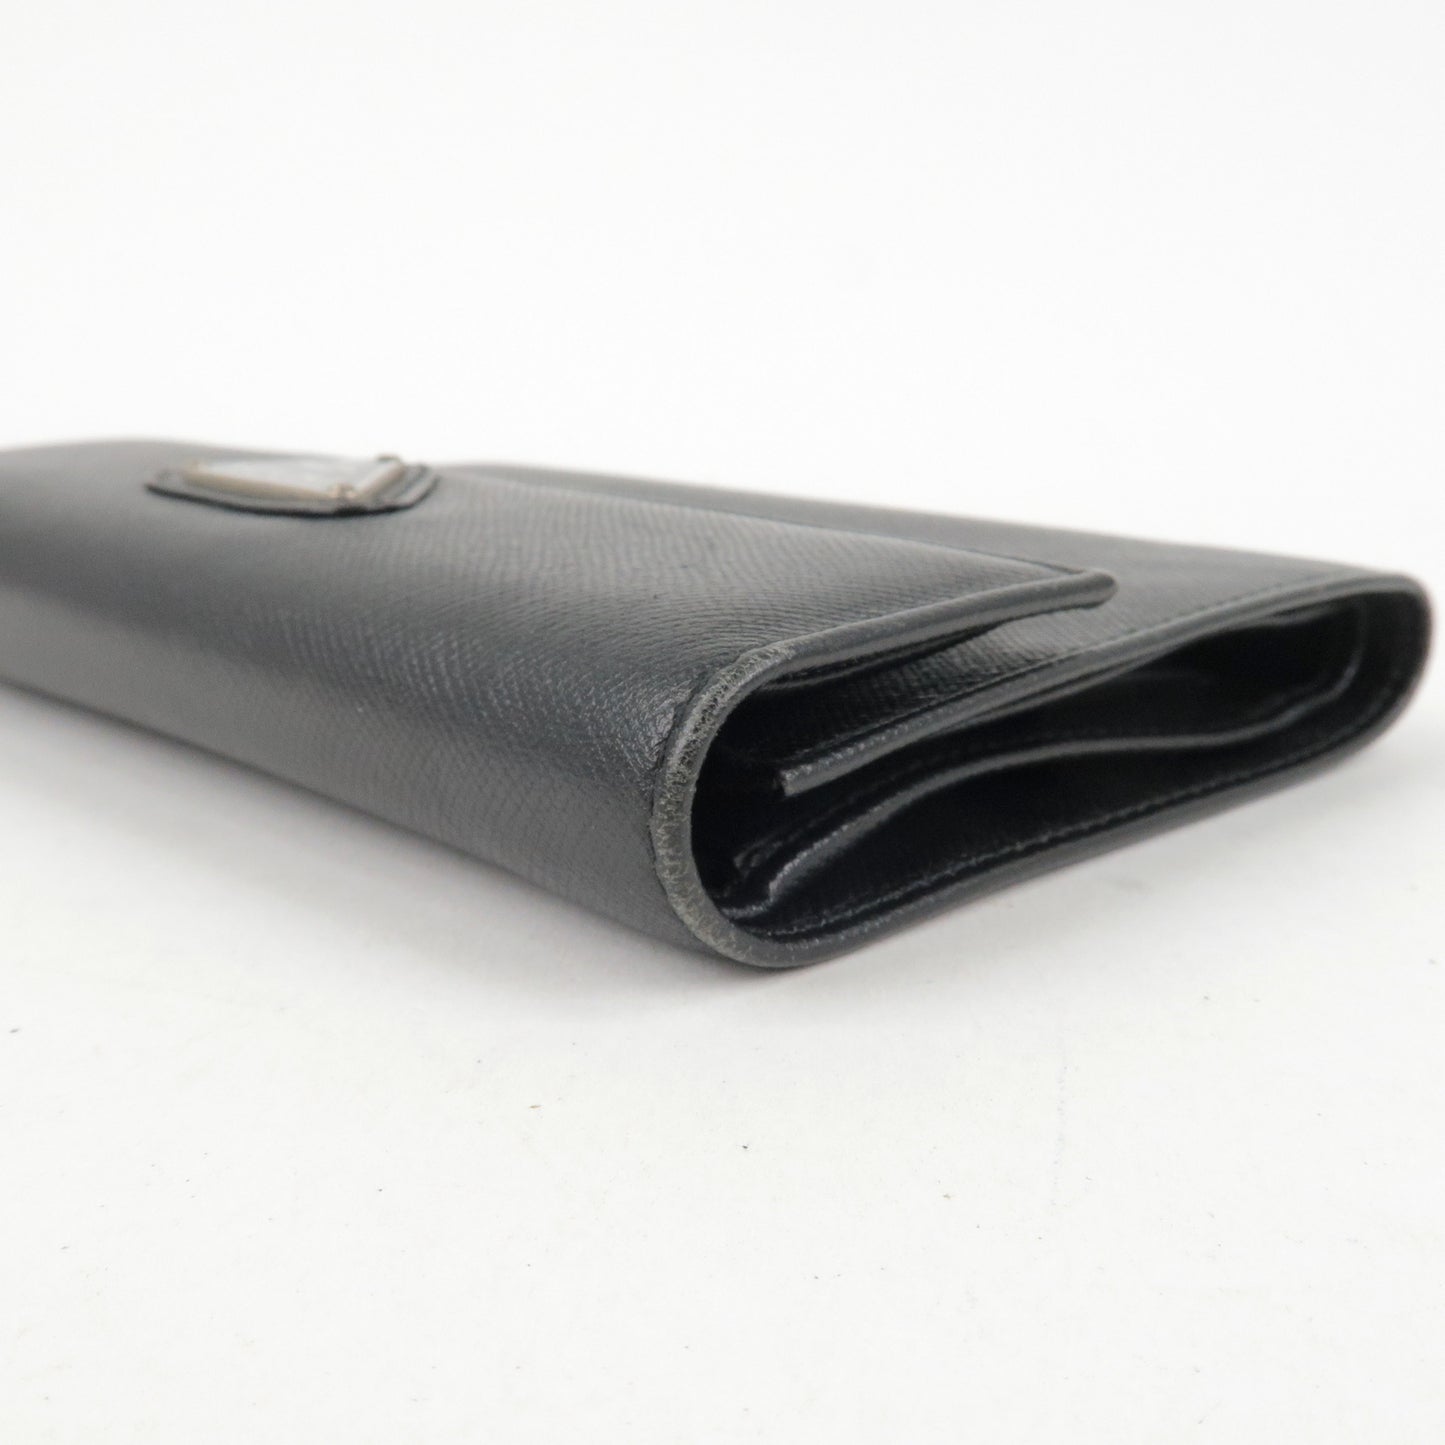 PRADA Logo Leather Tri-Fold Wallet Black M510A